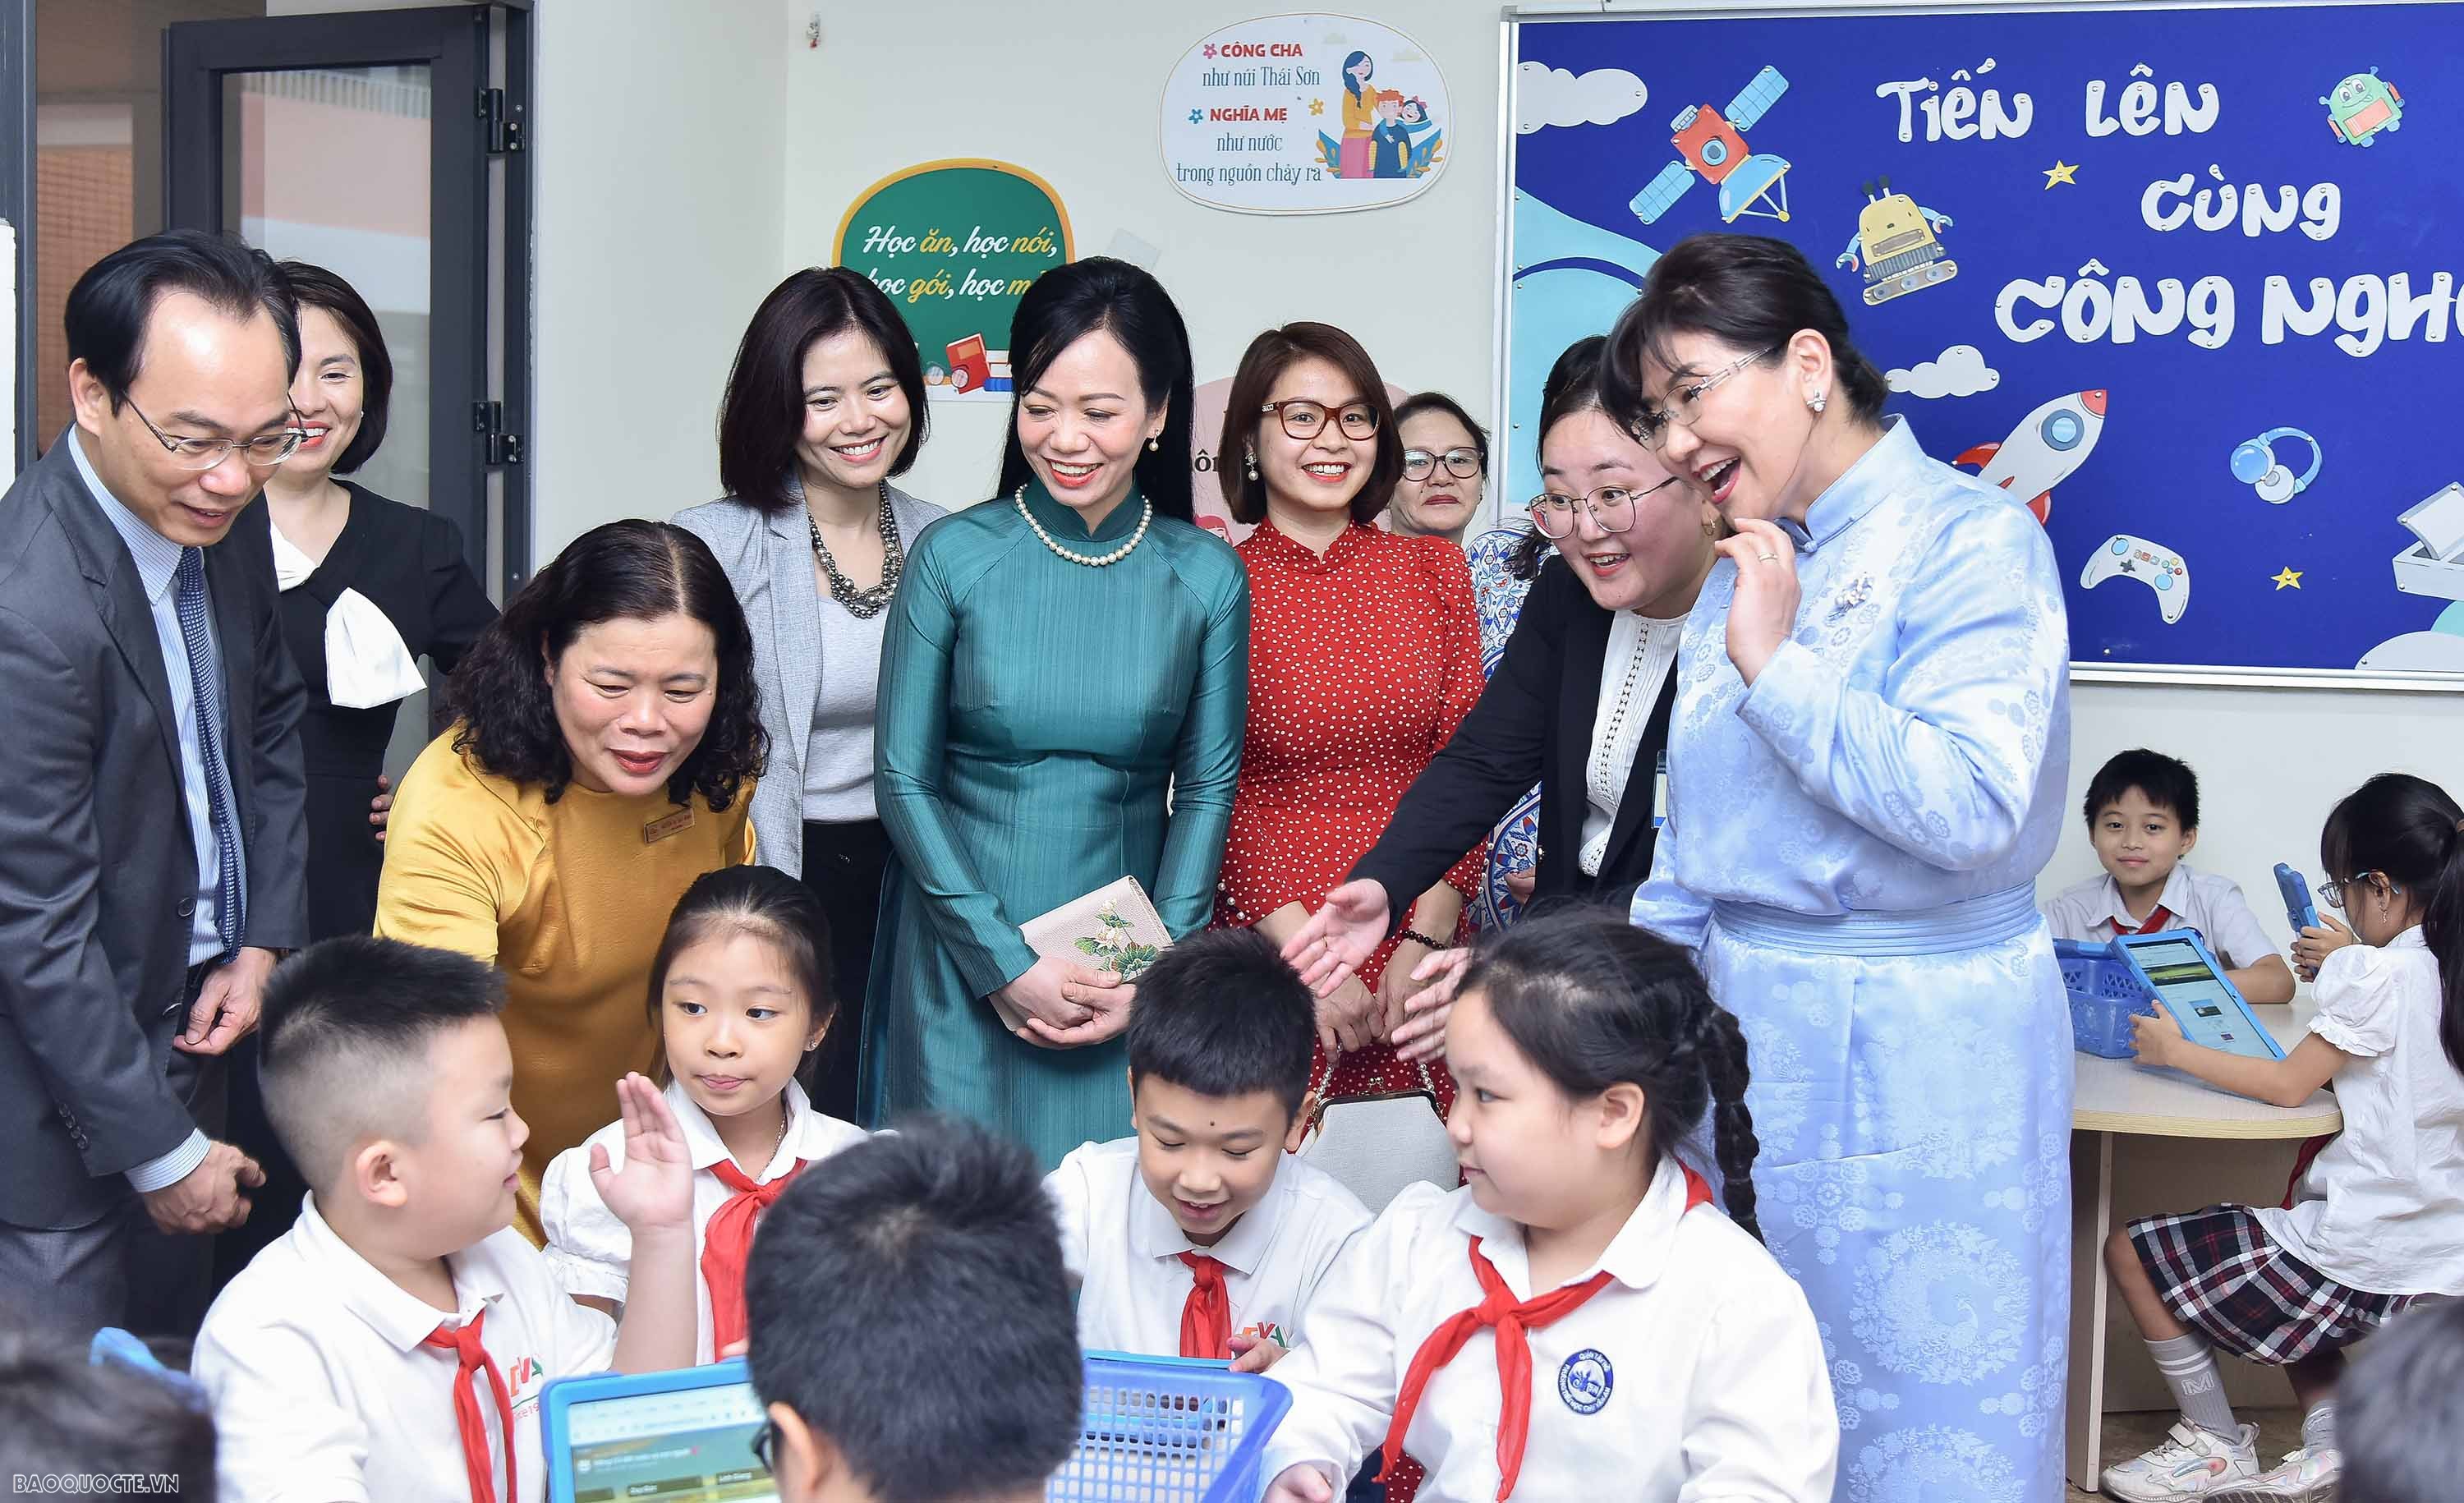 Mongolian President’s spouse visits Chu Van An Primary School